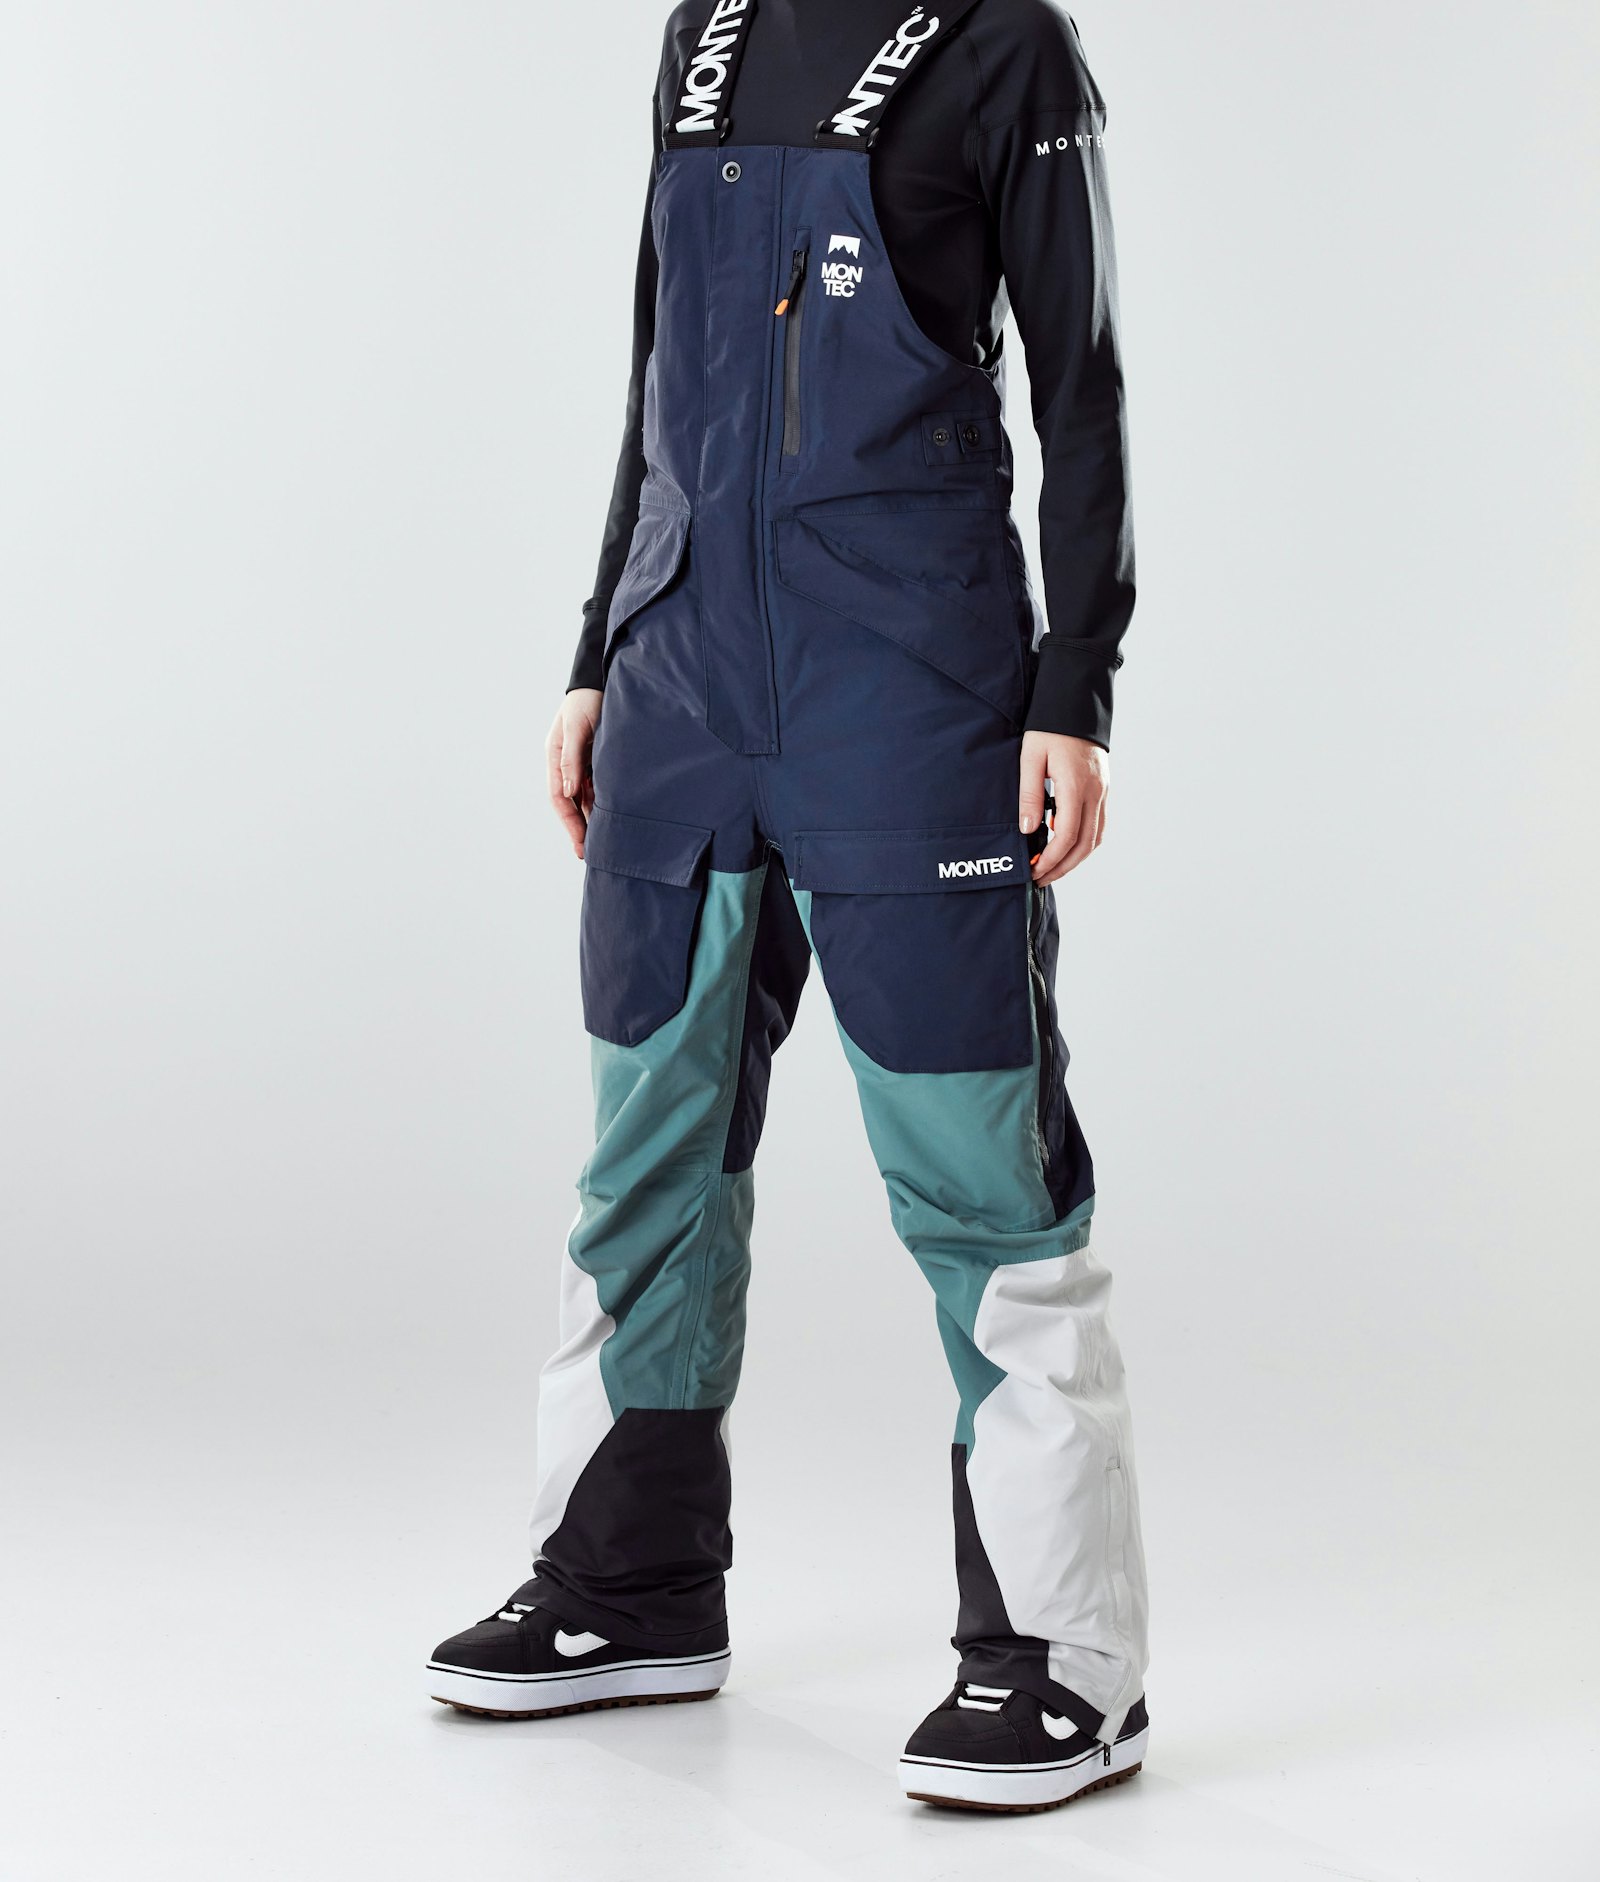 Fawk W 2020 Pantalon de Snowboard Femme Marine/Atlantic/Light Grey